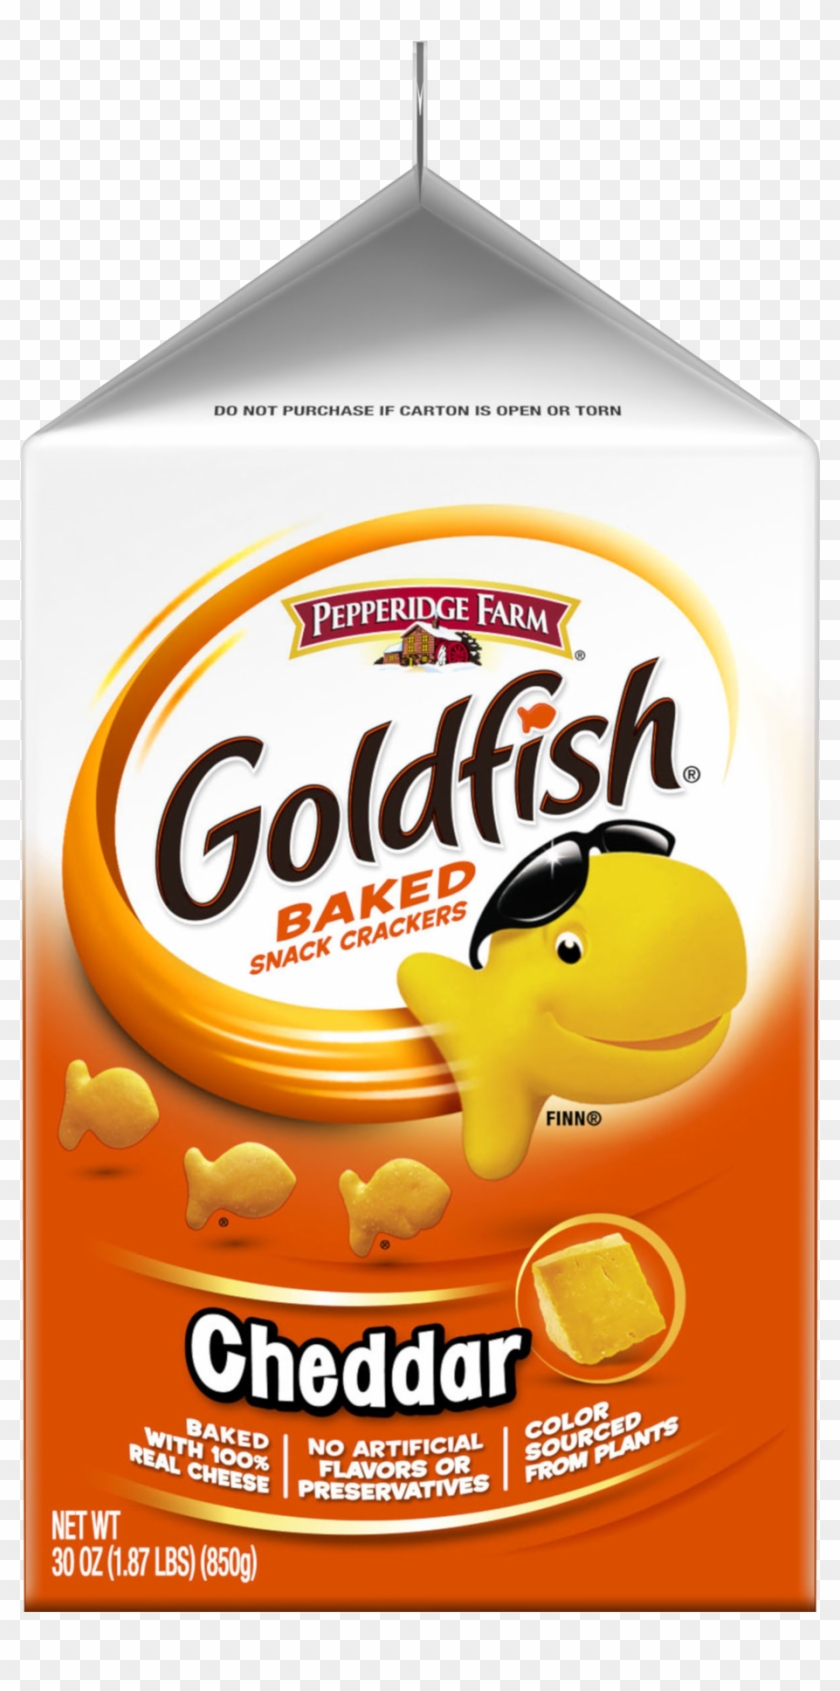 Pepperidge Farm Goldfish Baked Snack Crackers Cheddar - Goldfish Crackers #625734